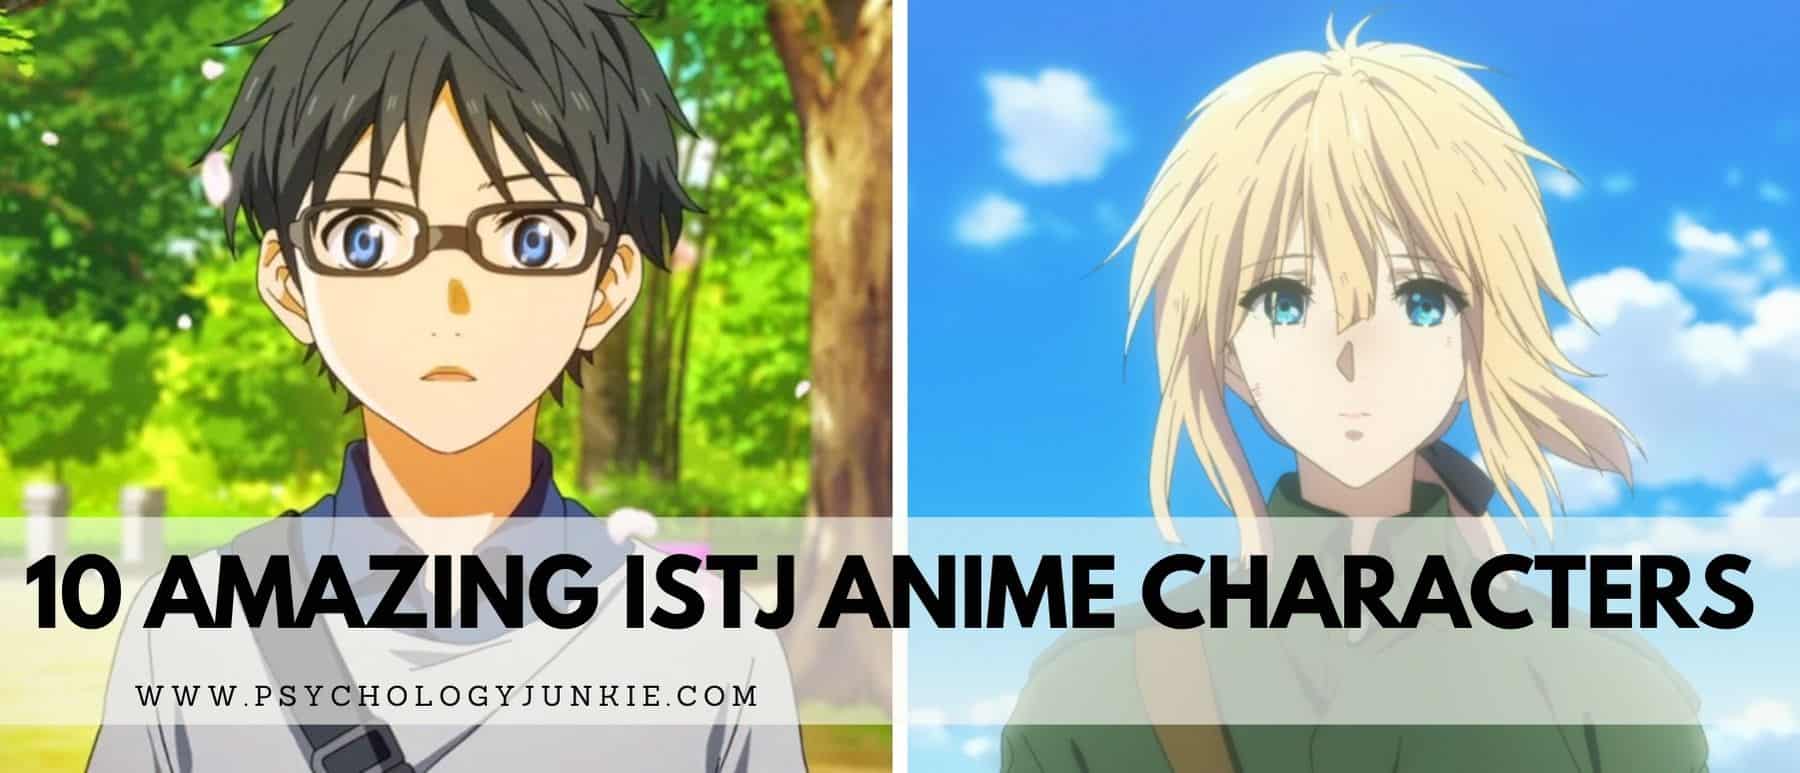 10 Amazing ISTJ Anime Characters - Psychology Junkie